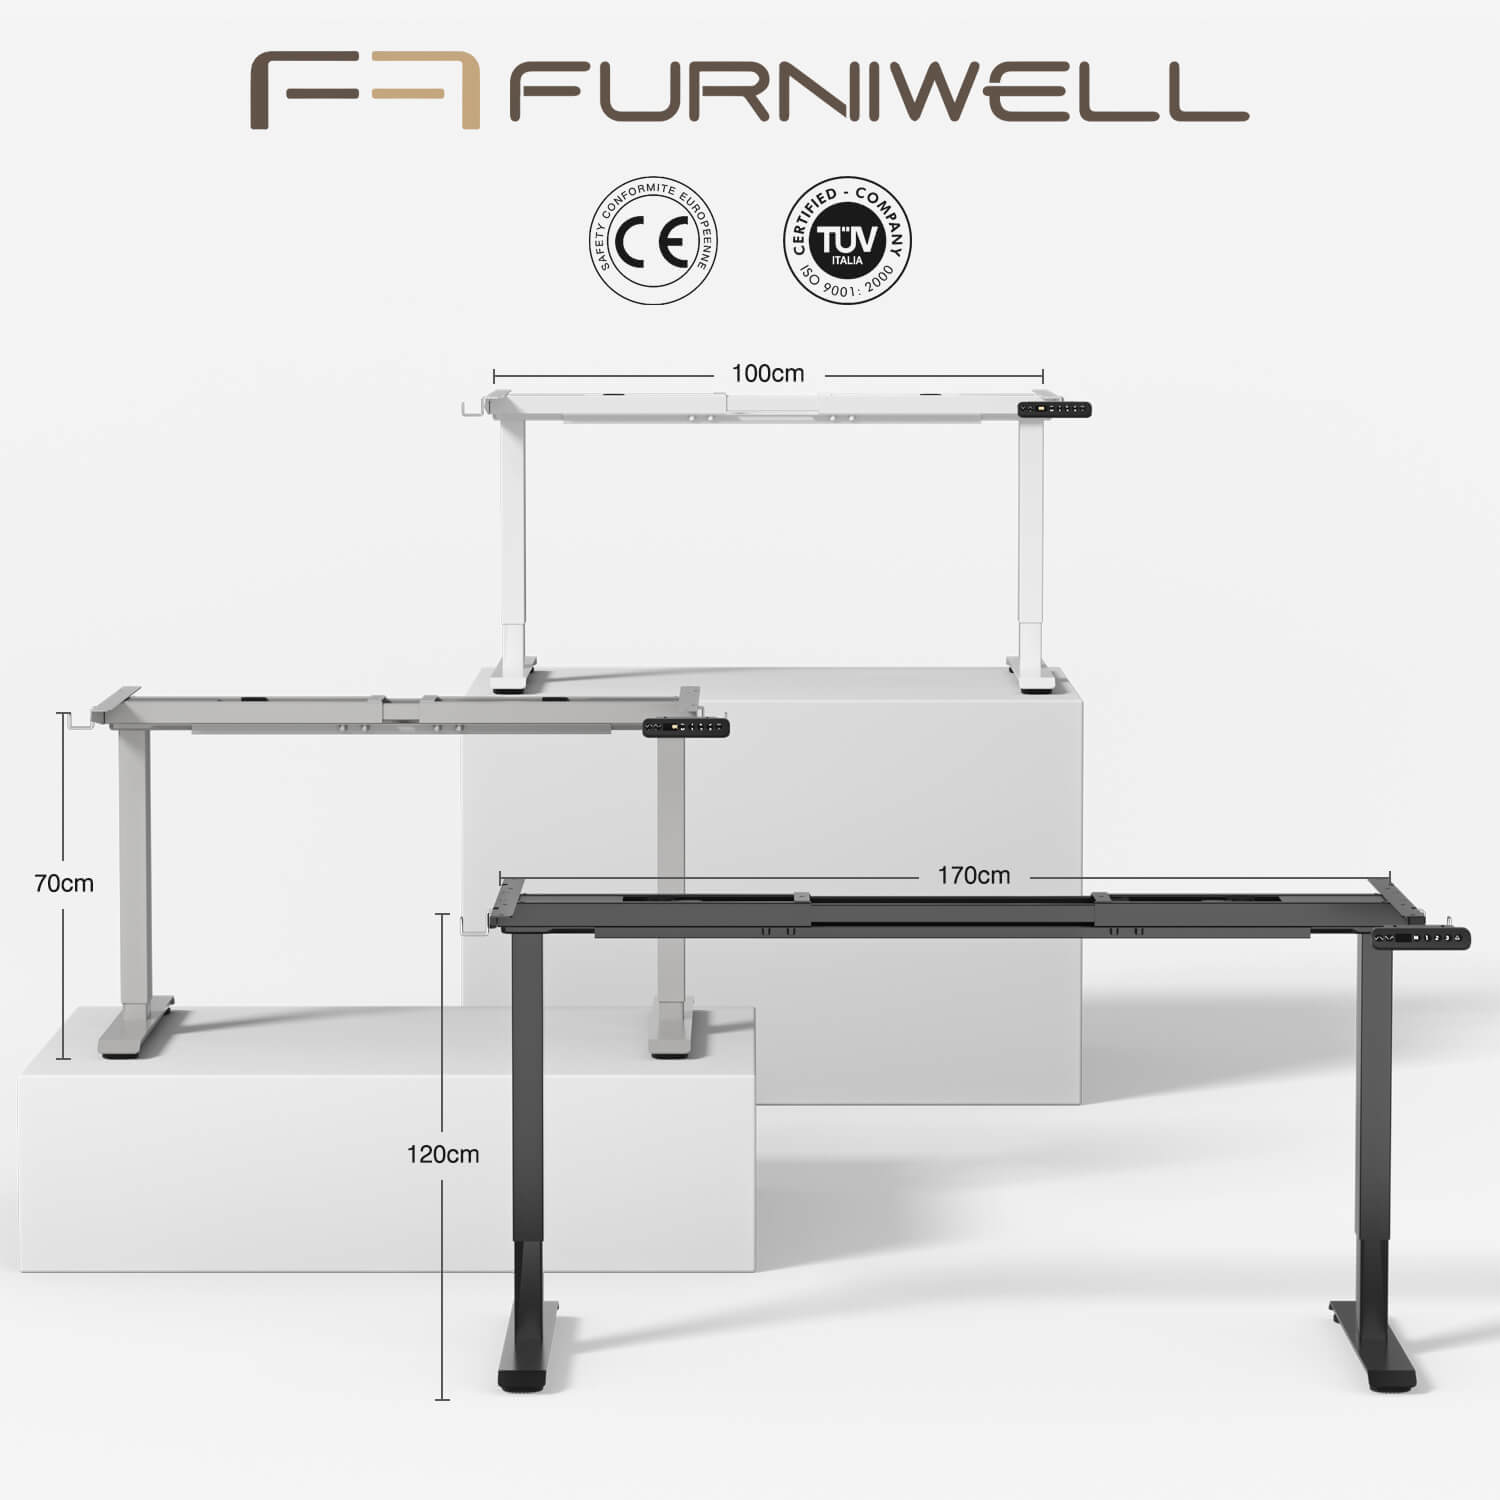 Furniwell Dual Ultra Höhenverstellbares Tischgestell